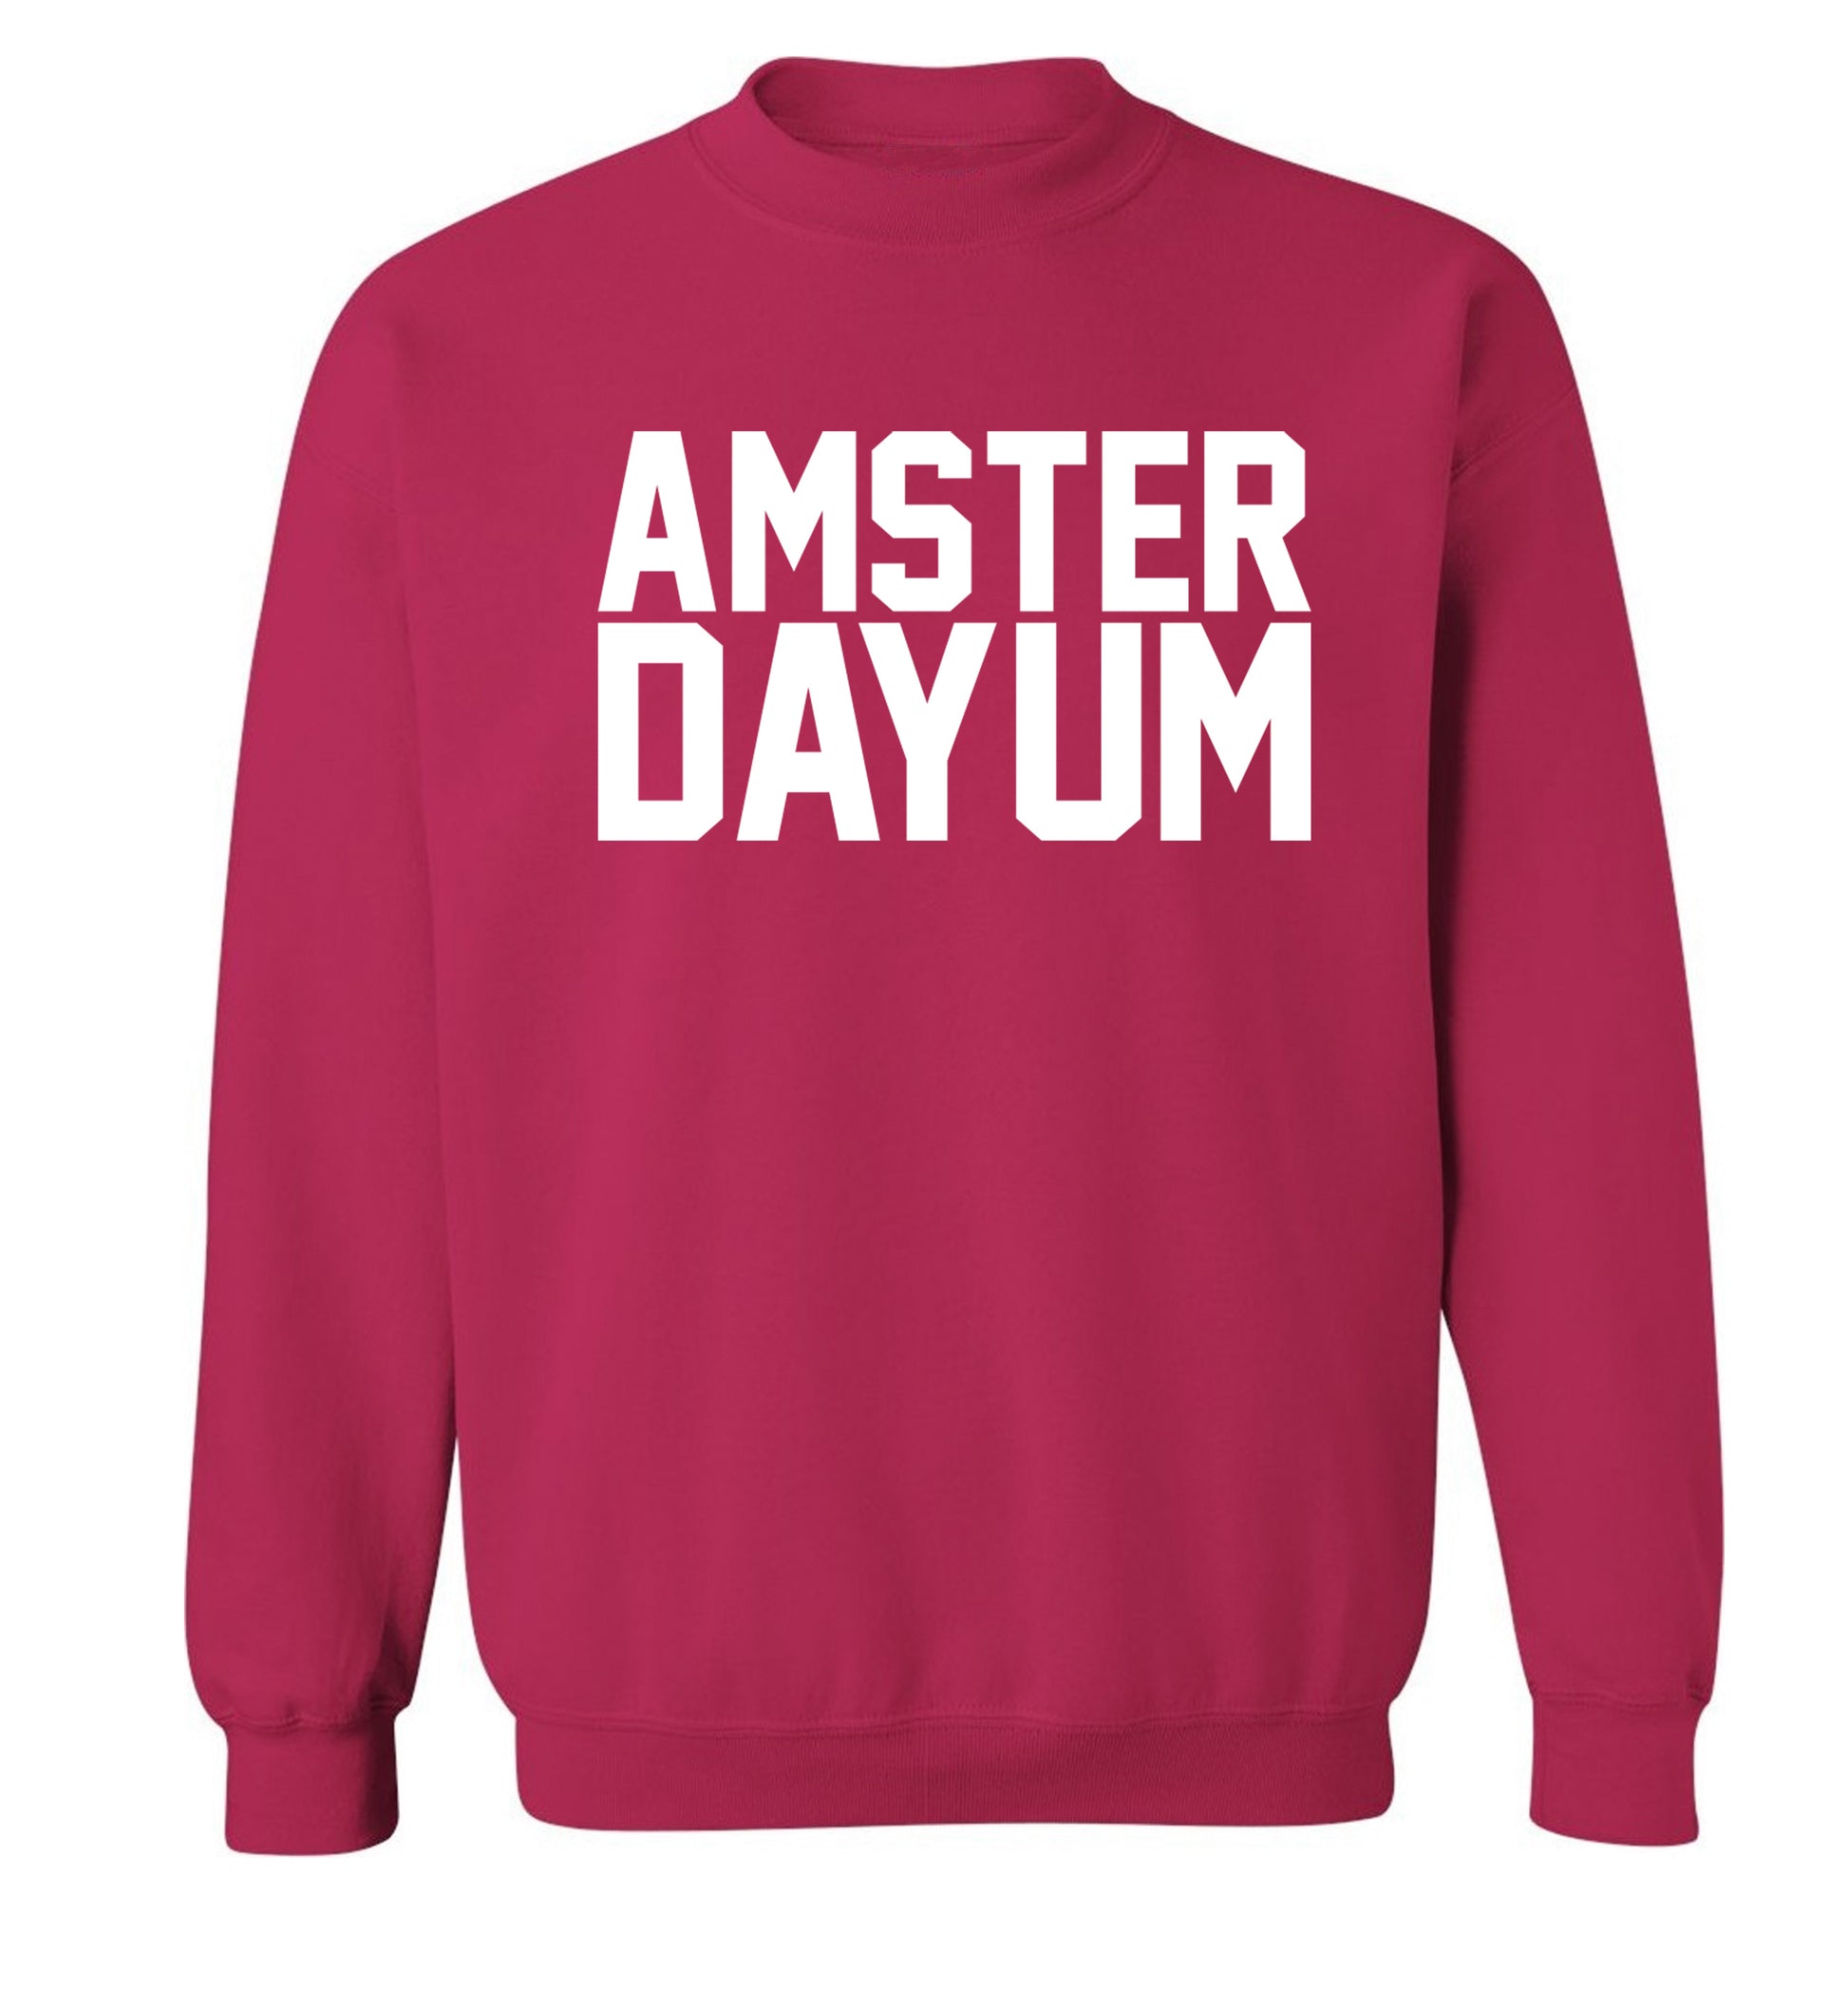 Amsterdayum Adult's unisex pink Sweater 2XL